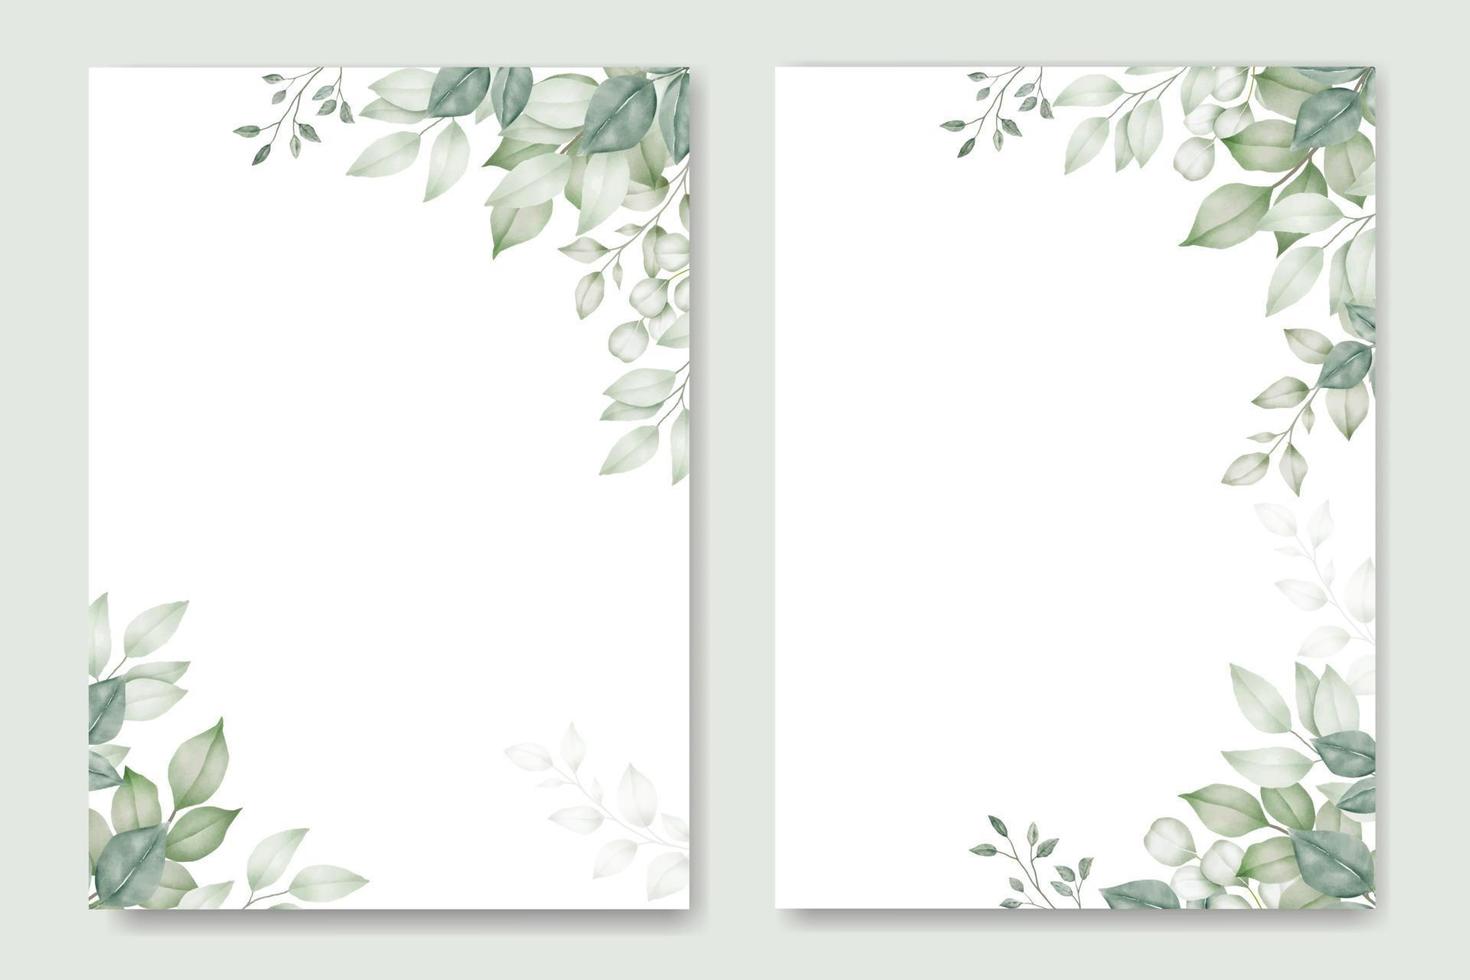 Watercolor Floral Wedding invitation Card Template vector